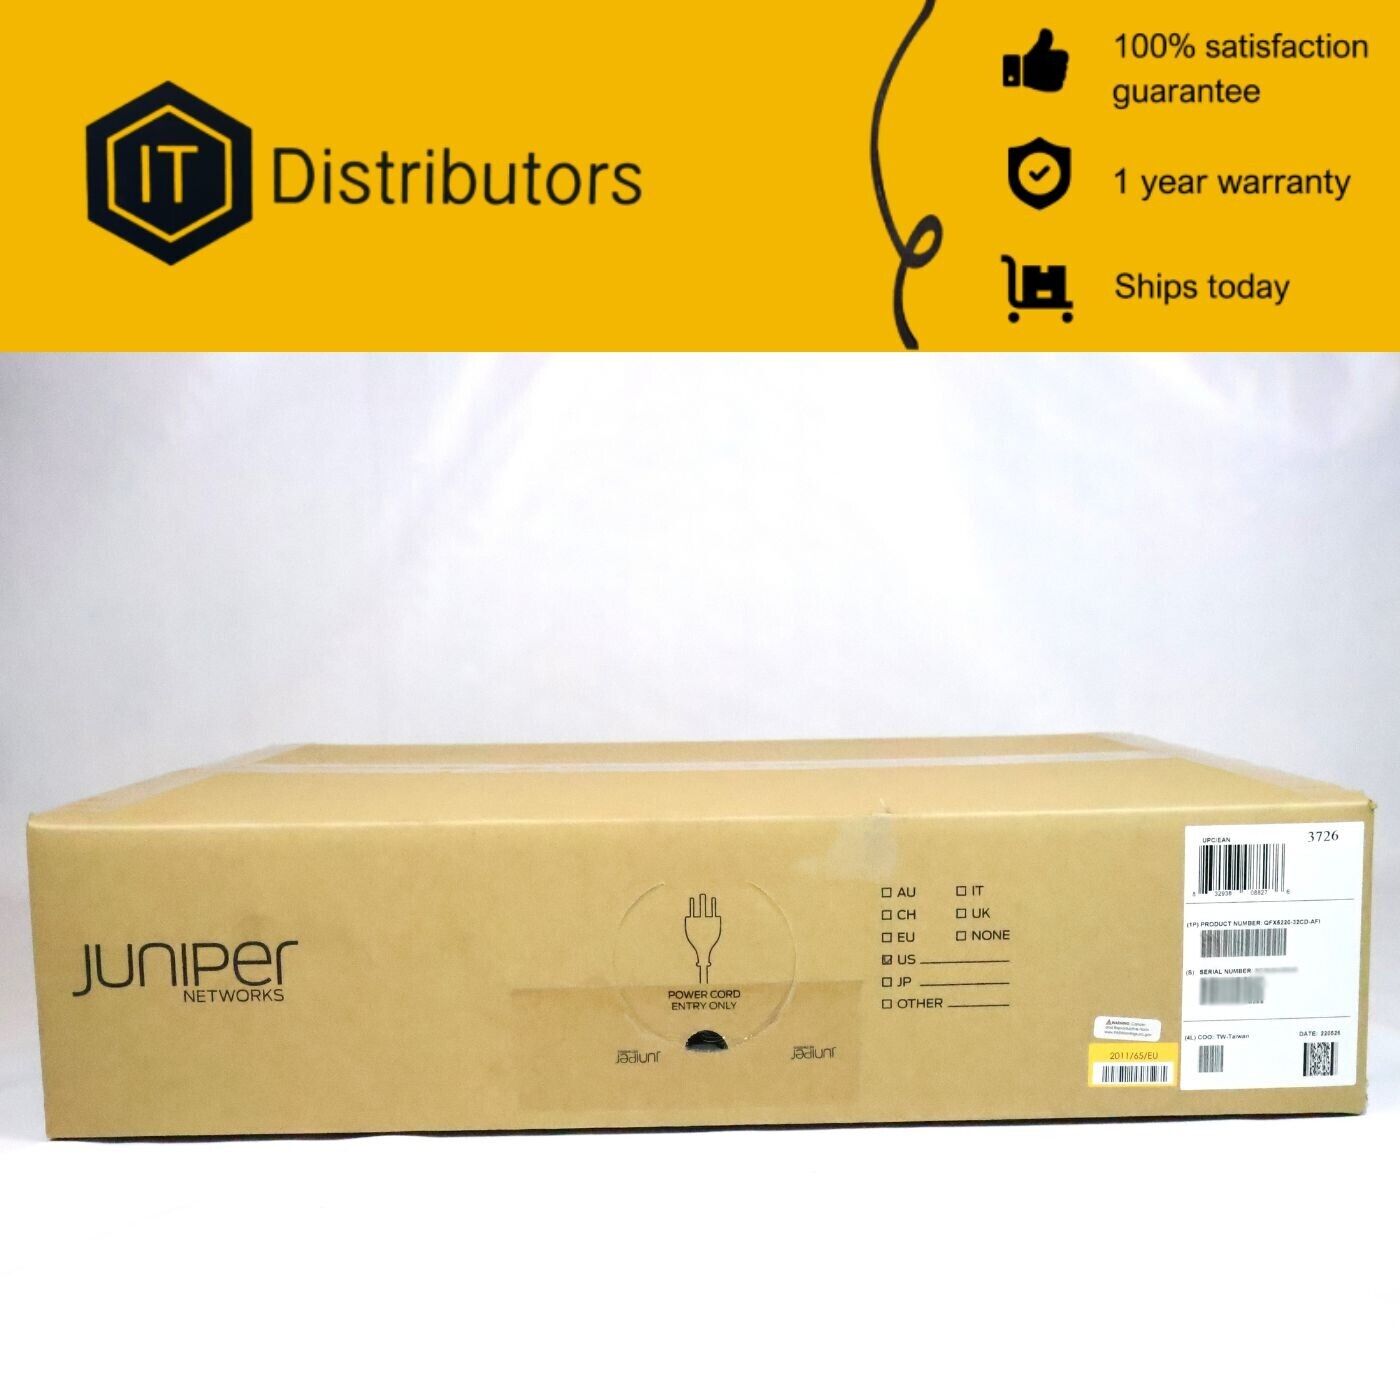 Juniper QFX5220-32CD-AFI / New / 1 Year warranty / SHIPS TODAY